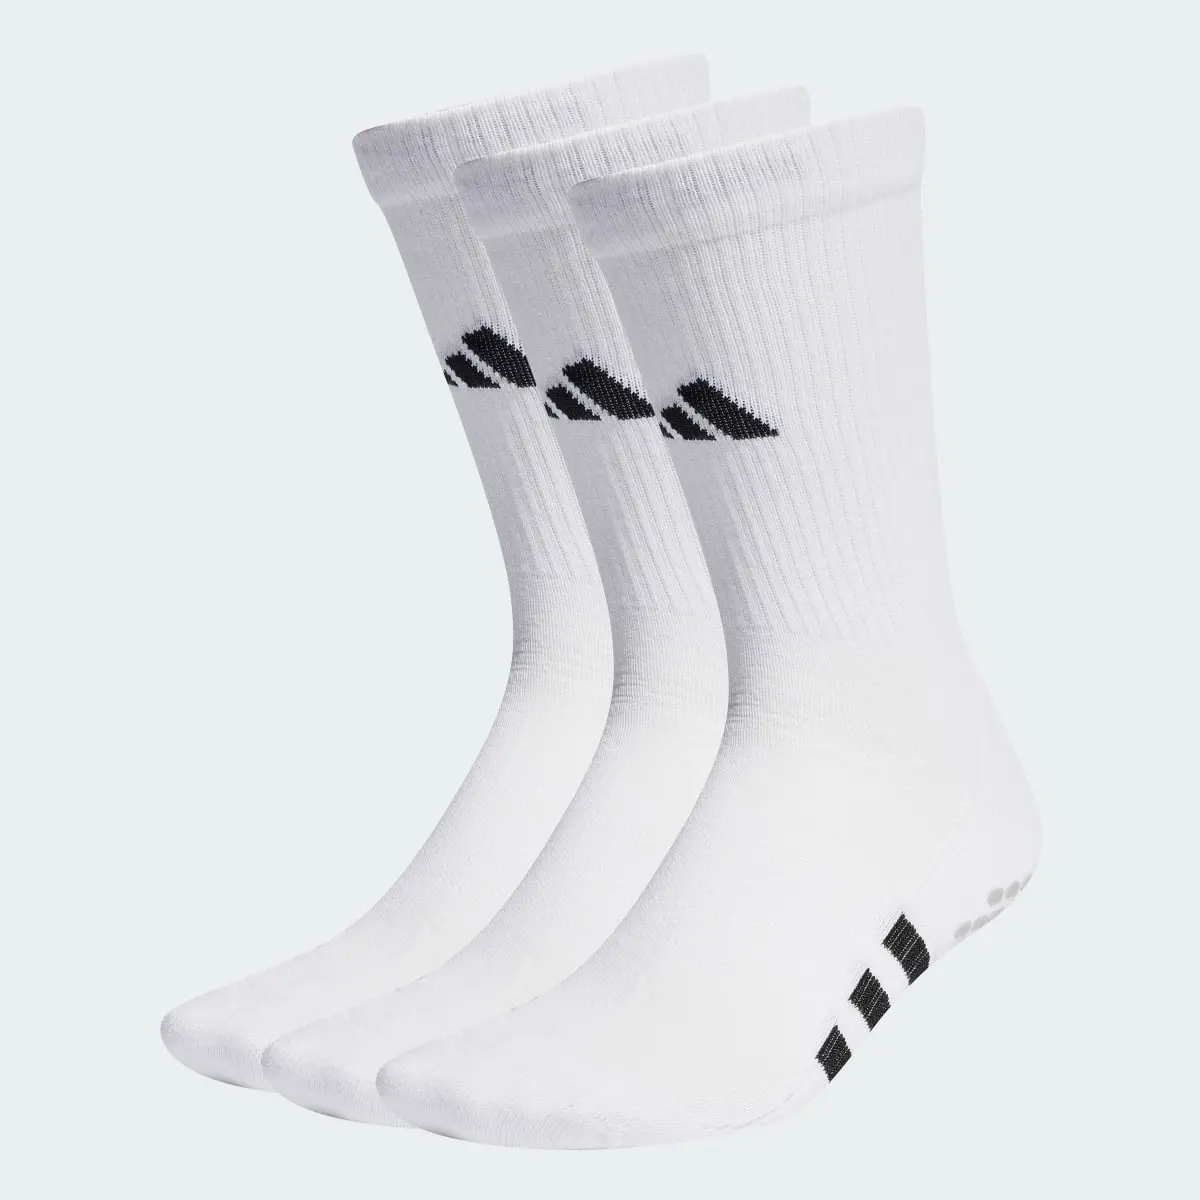 Adidas Performance Cushioned Crew Grip Socks 3-Pairs Pack. 2